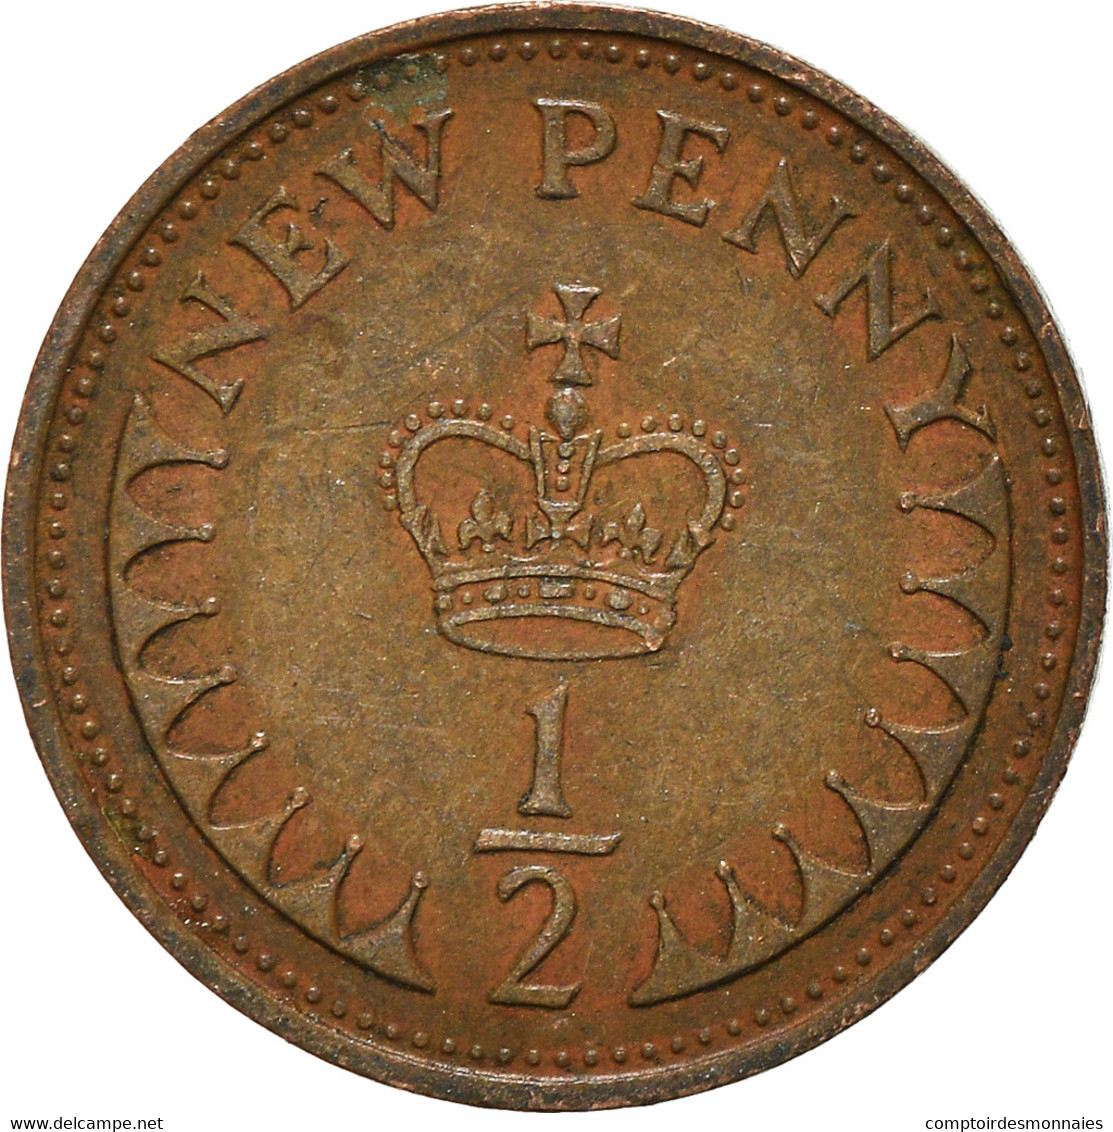 Monnaie, Grande-Bretagne, 1/2 New Penny, 1971 - 1/2 Penny & 1/2 New Penny